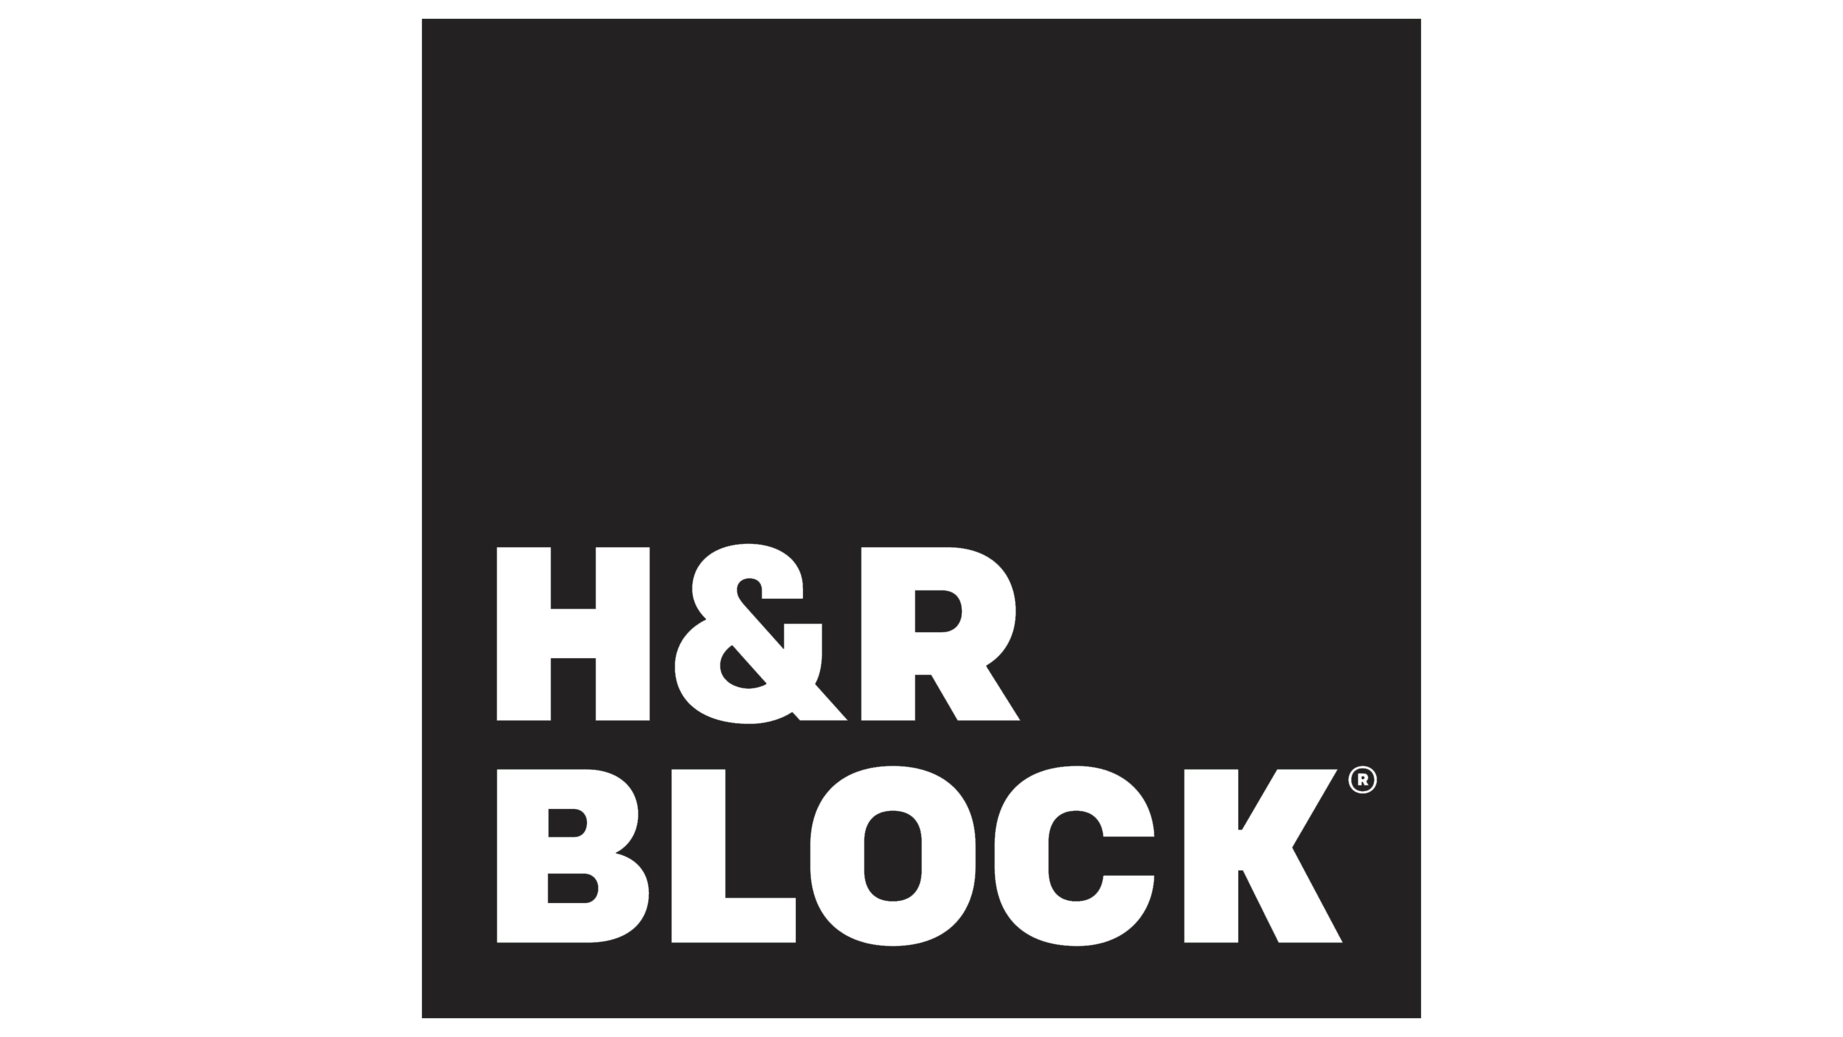 Hr block logo